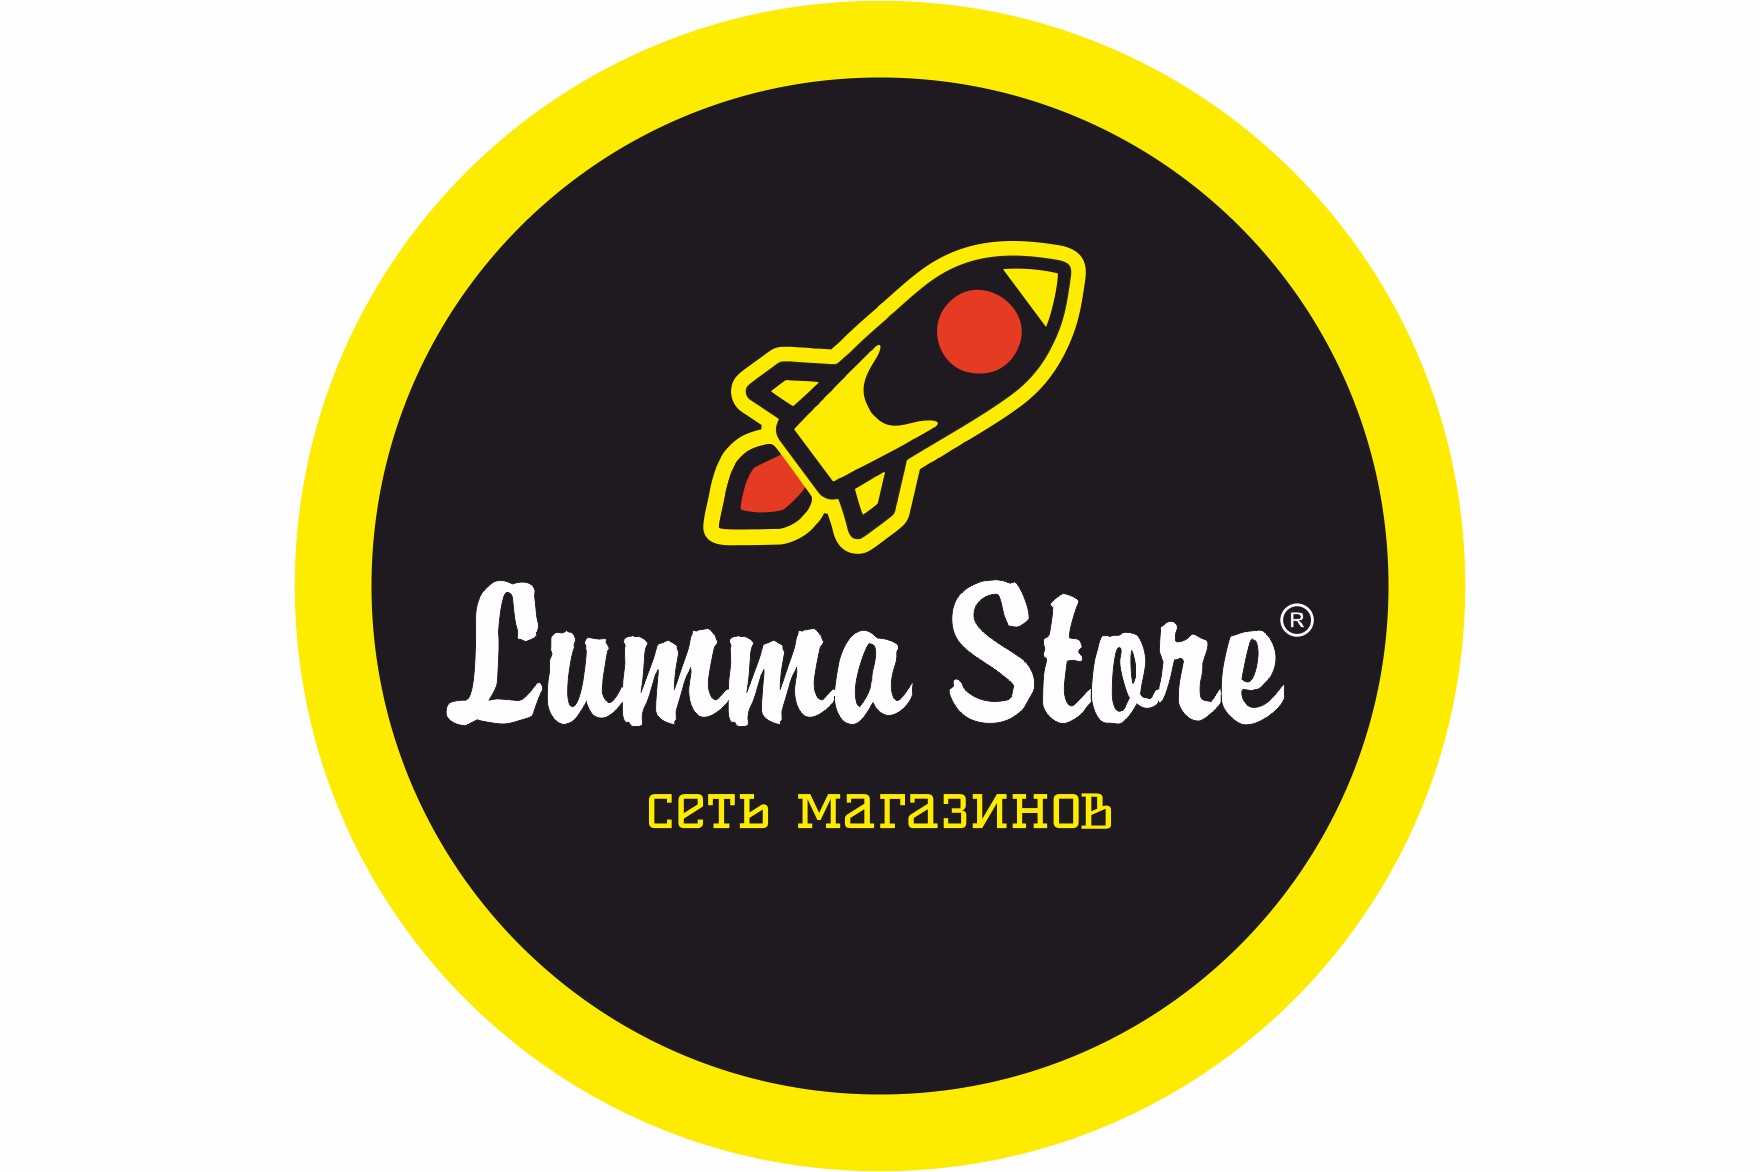 Lumma Store каталог